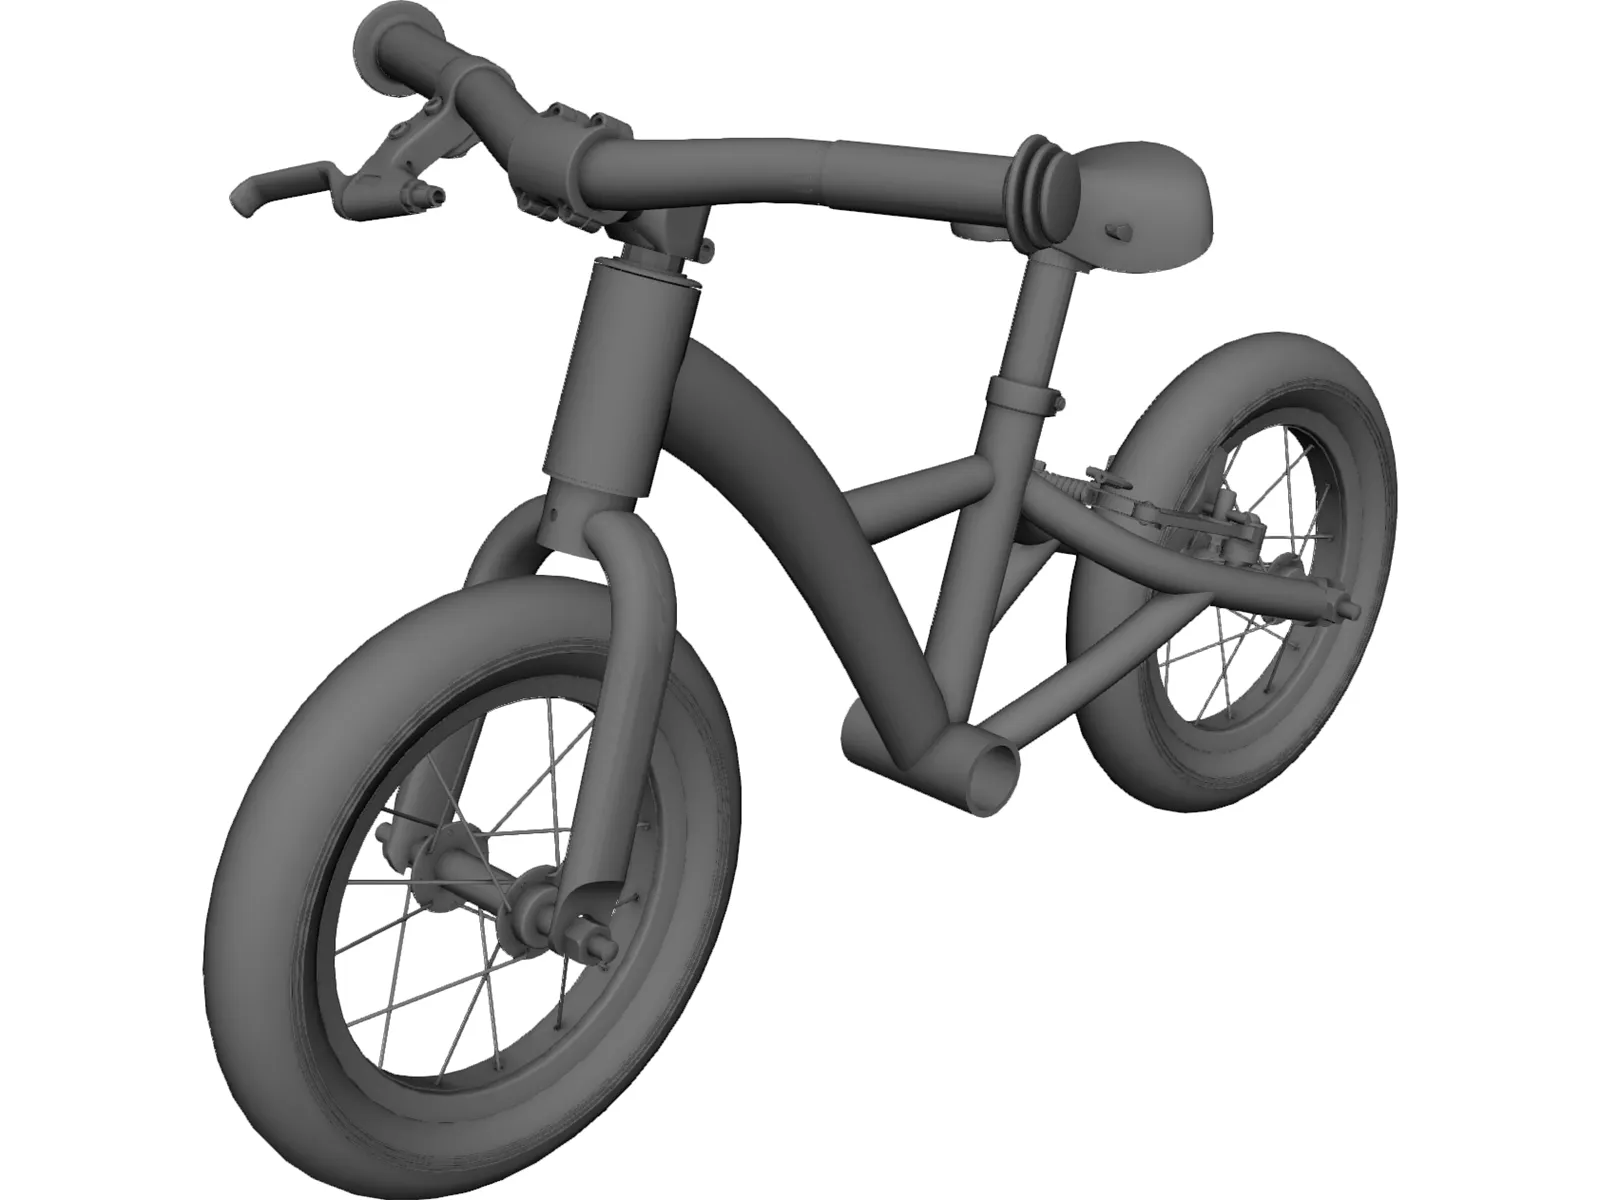 Kids 12inch Balance Bike 3D Model